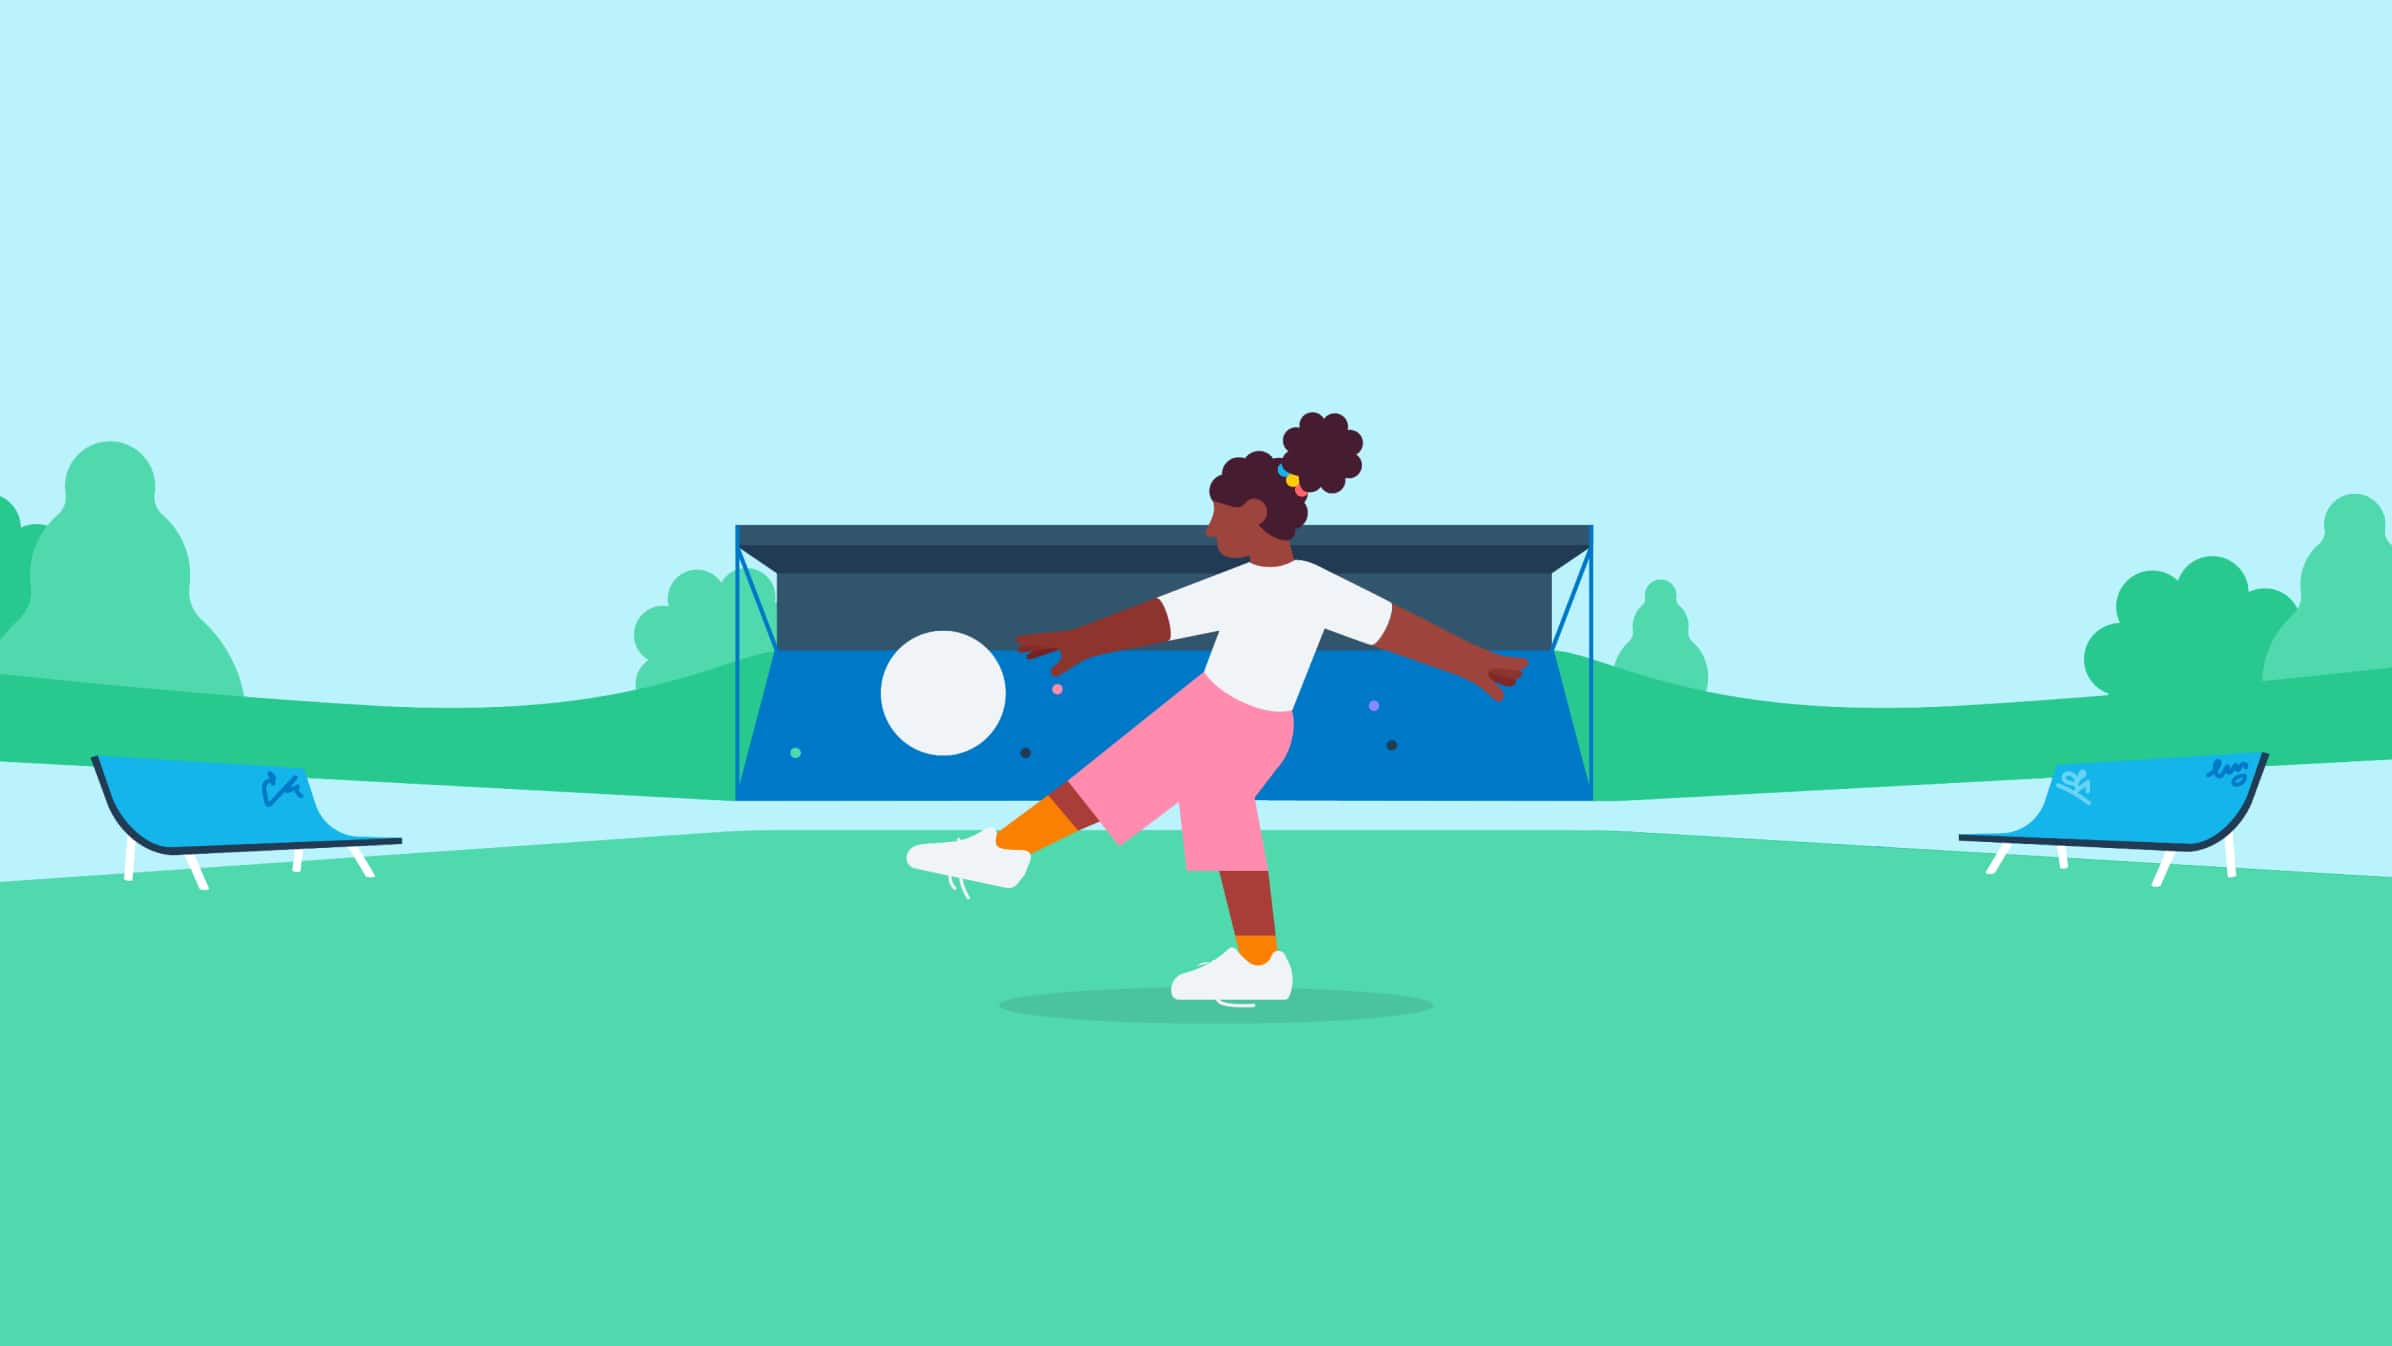 Illustration of a girl kicking a football